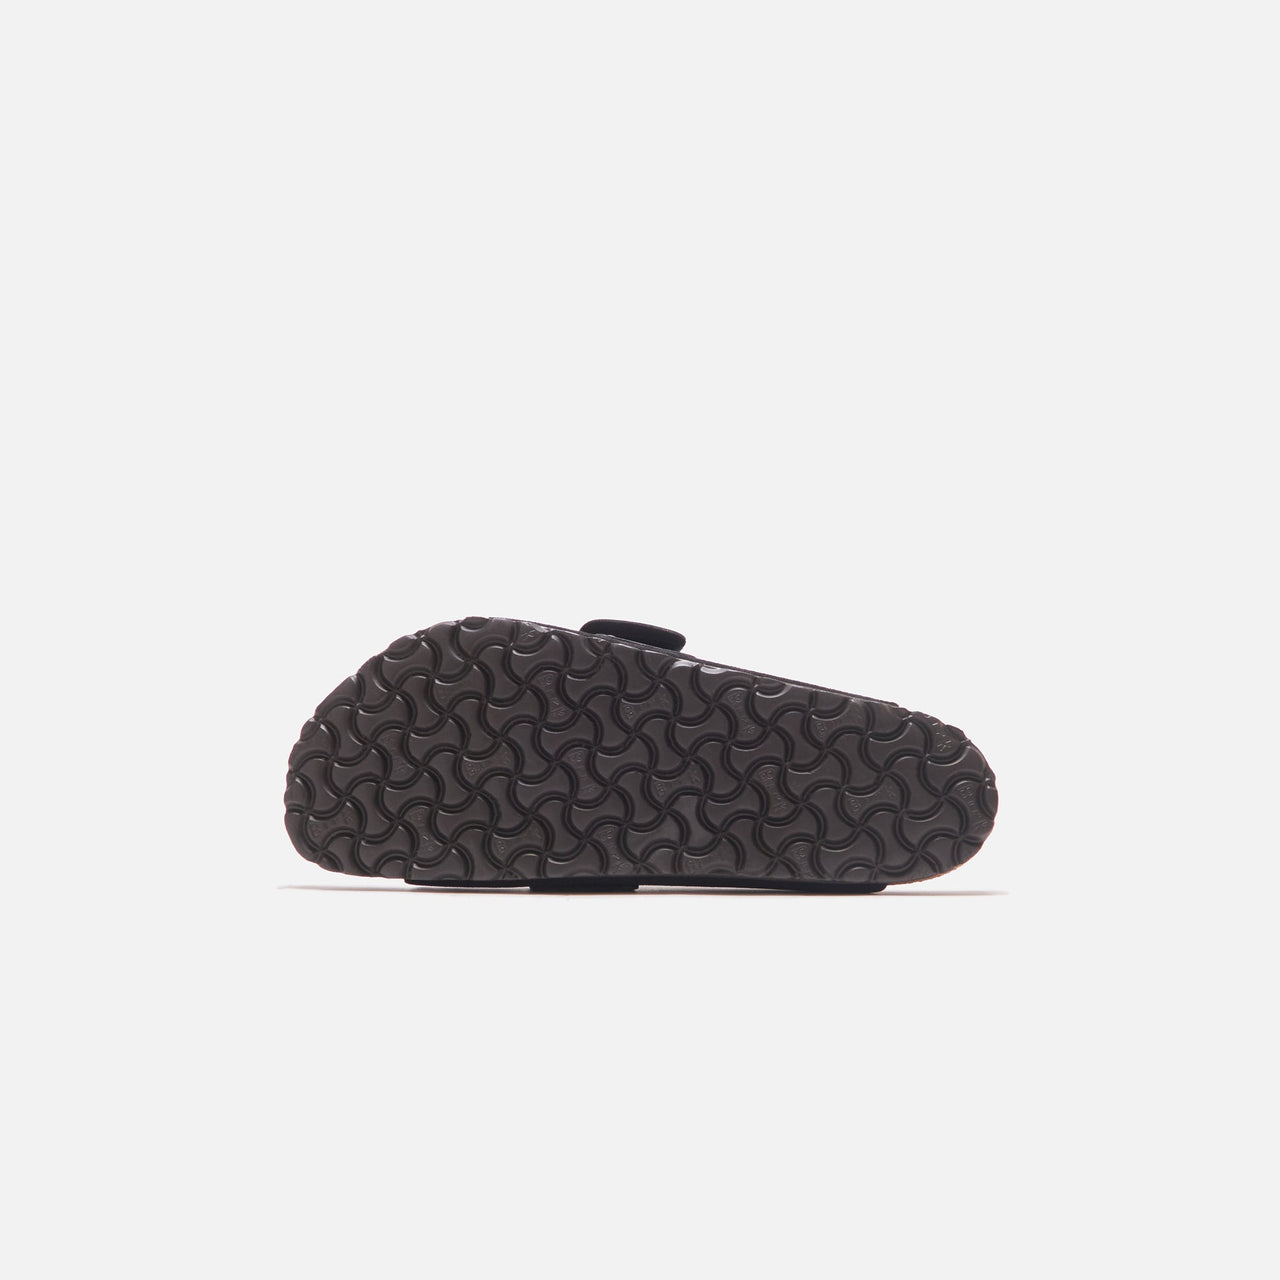 Black suede Birkenstock Kyoto sandals with adjustable straps and contoured footbed